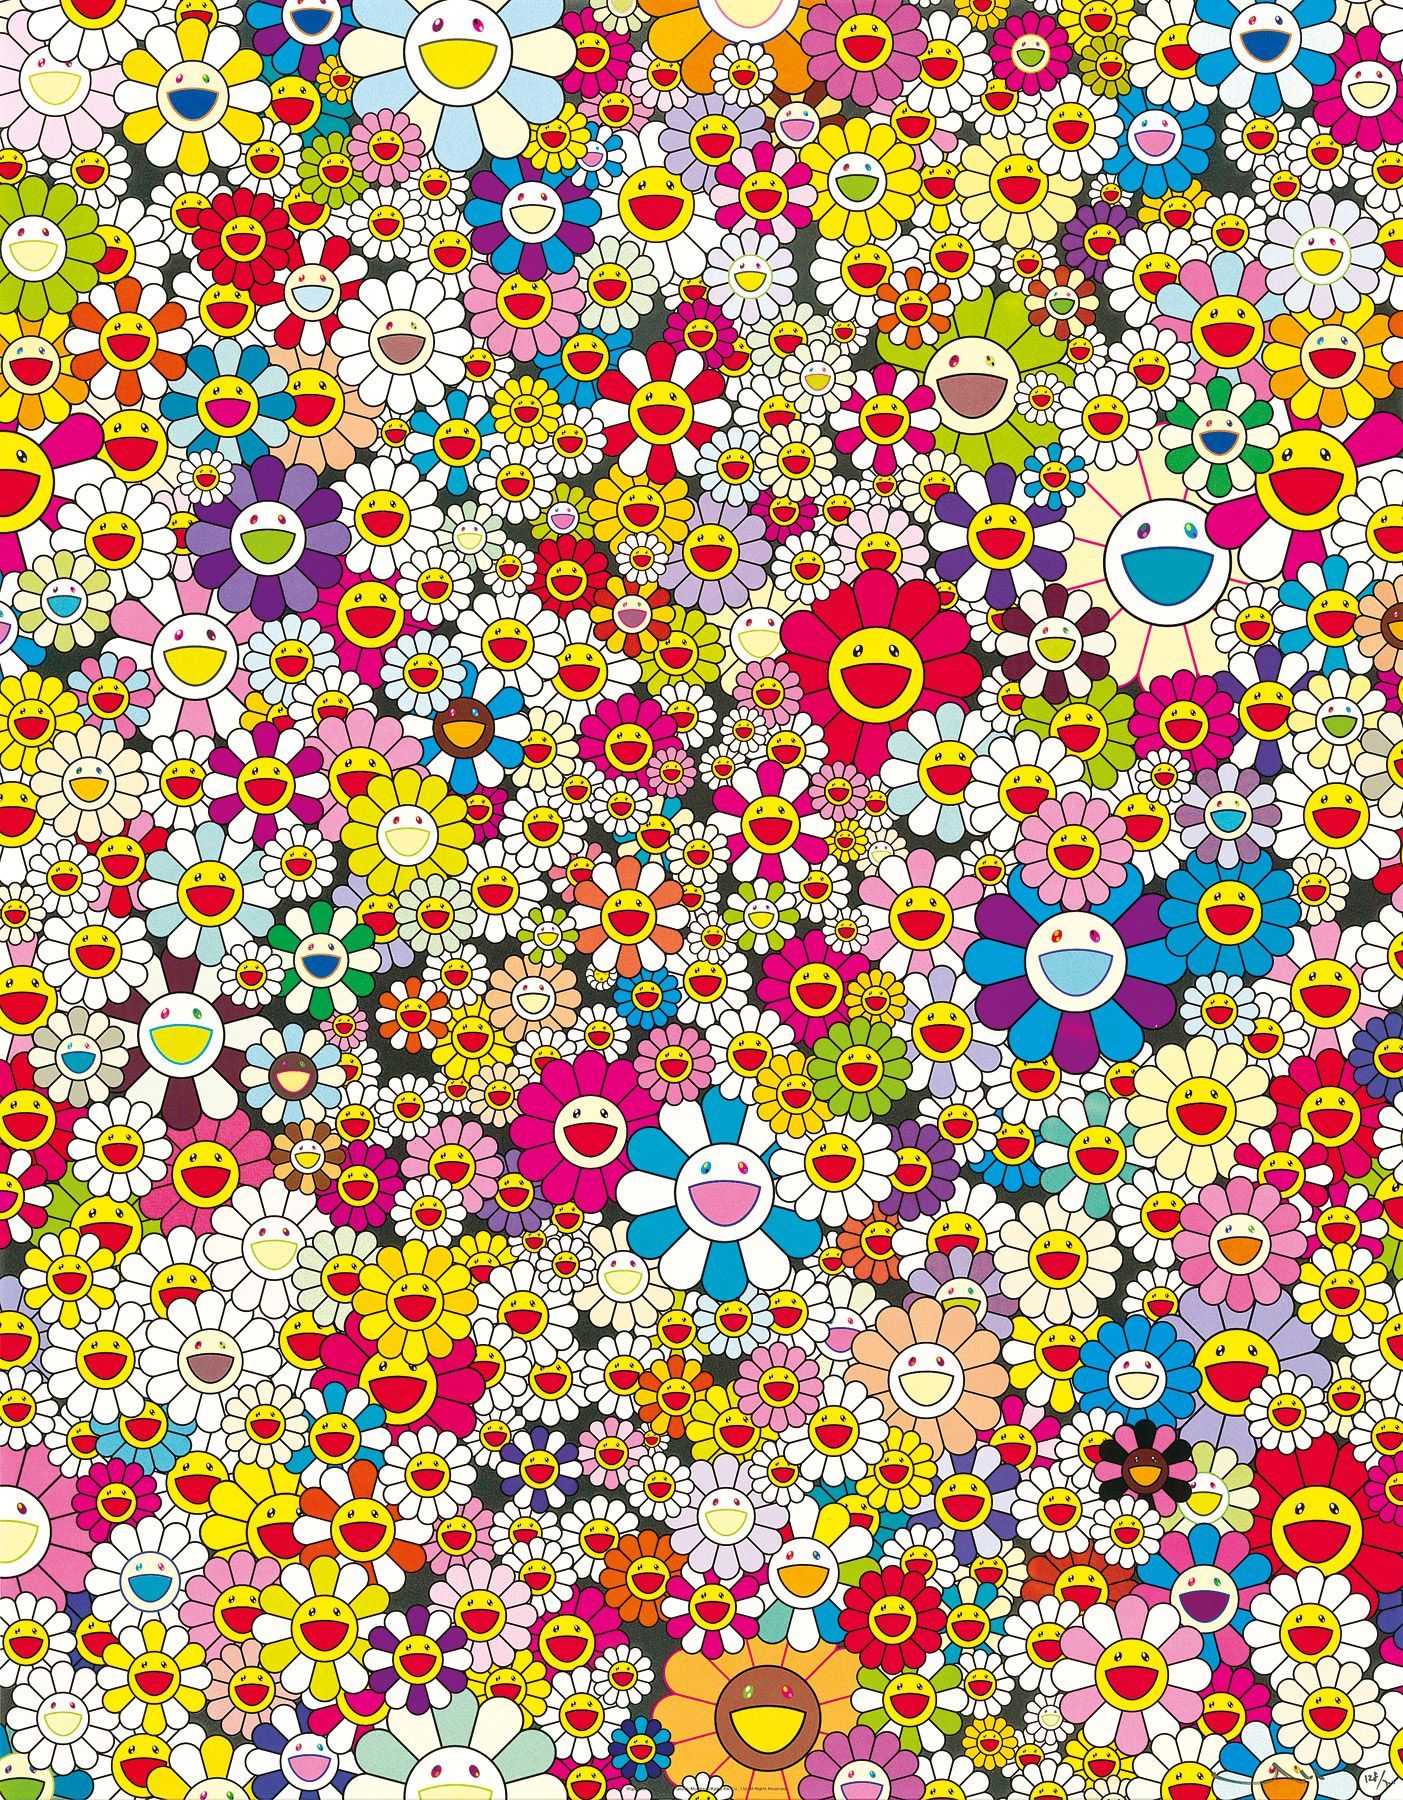 Takashi Murakami iPhone Wallpapers - Wallpaper Cave